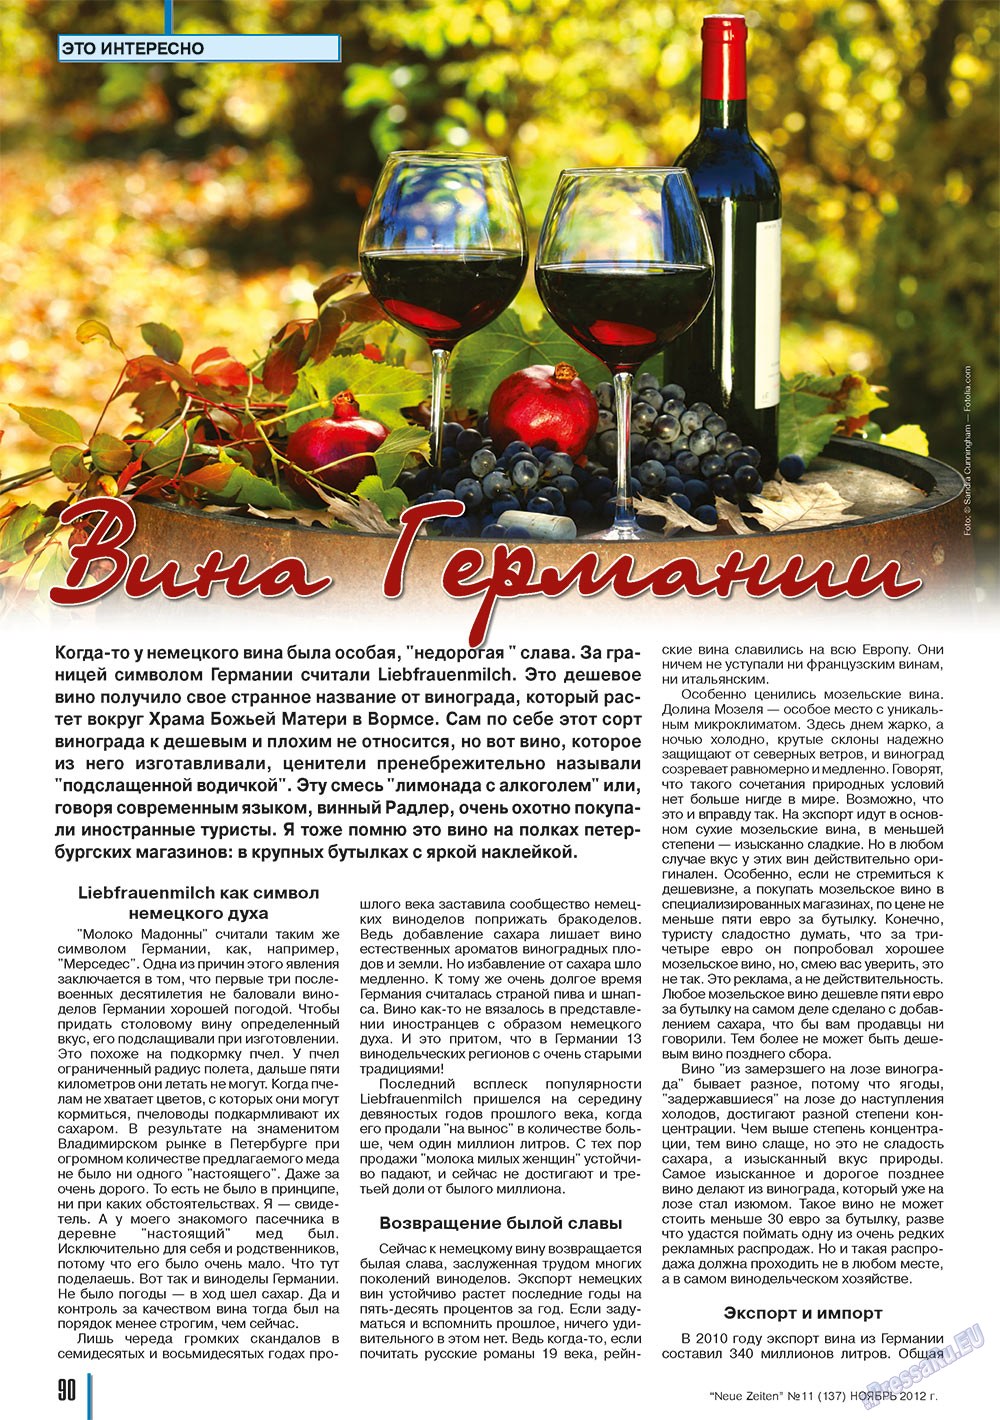 Neue Zeiten (журнал). 2012 год, номер 11, стр. 90